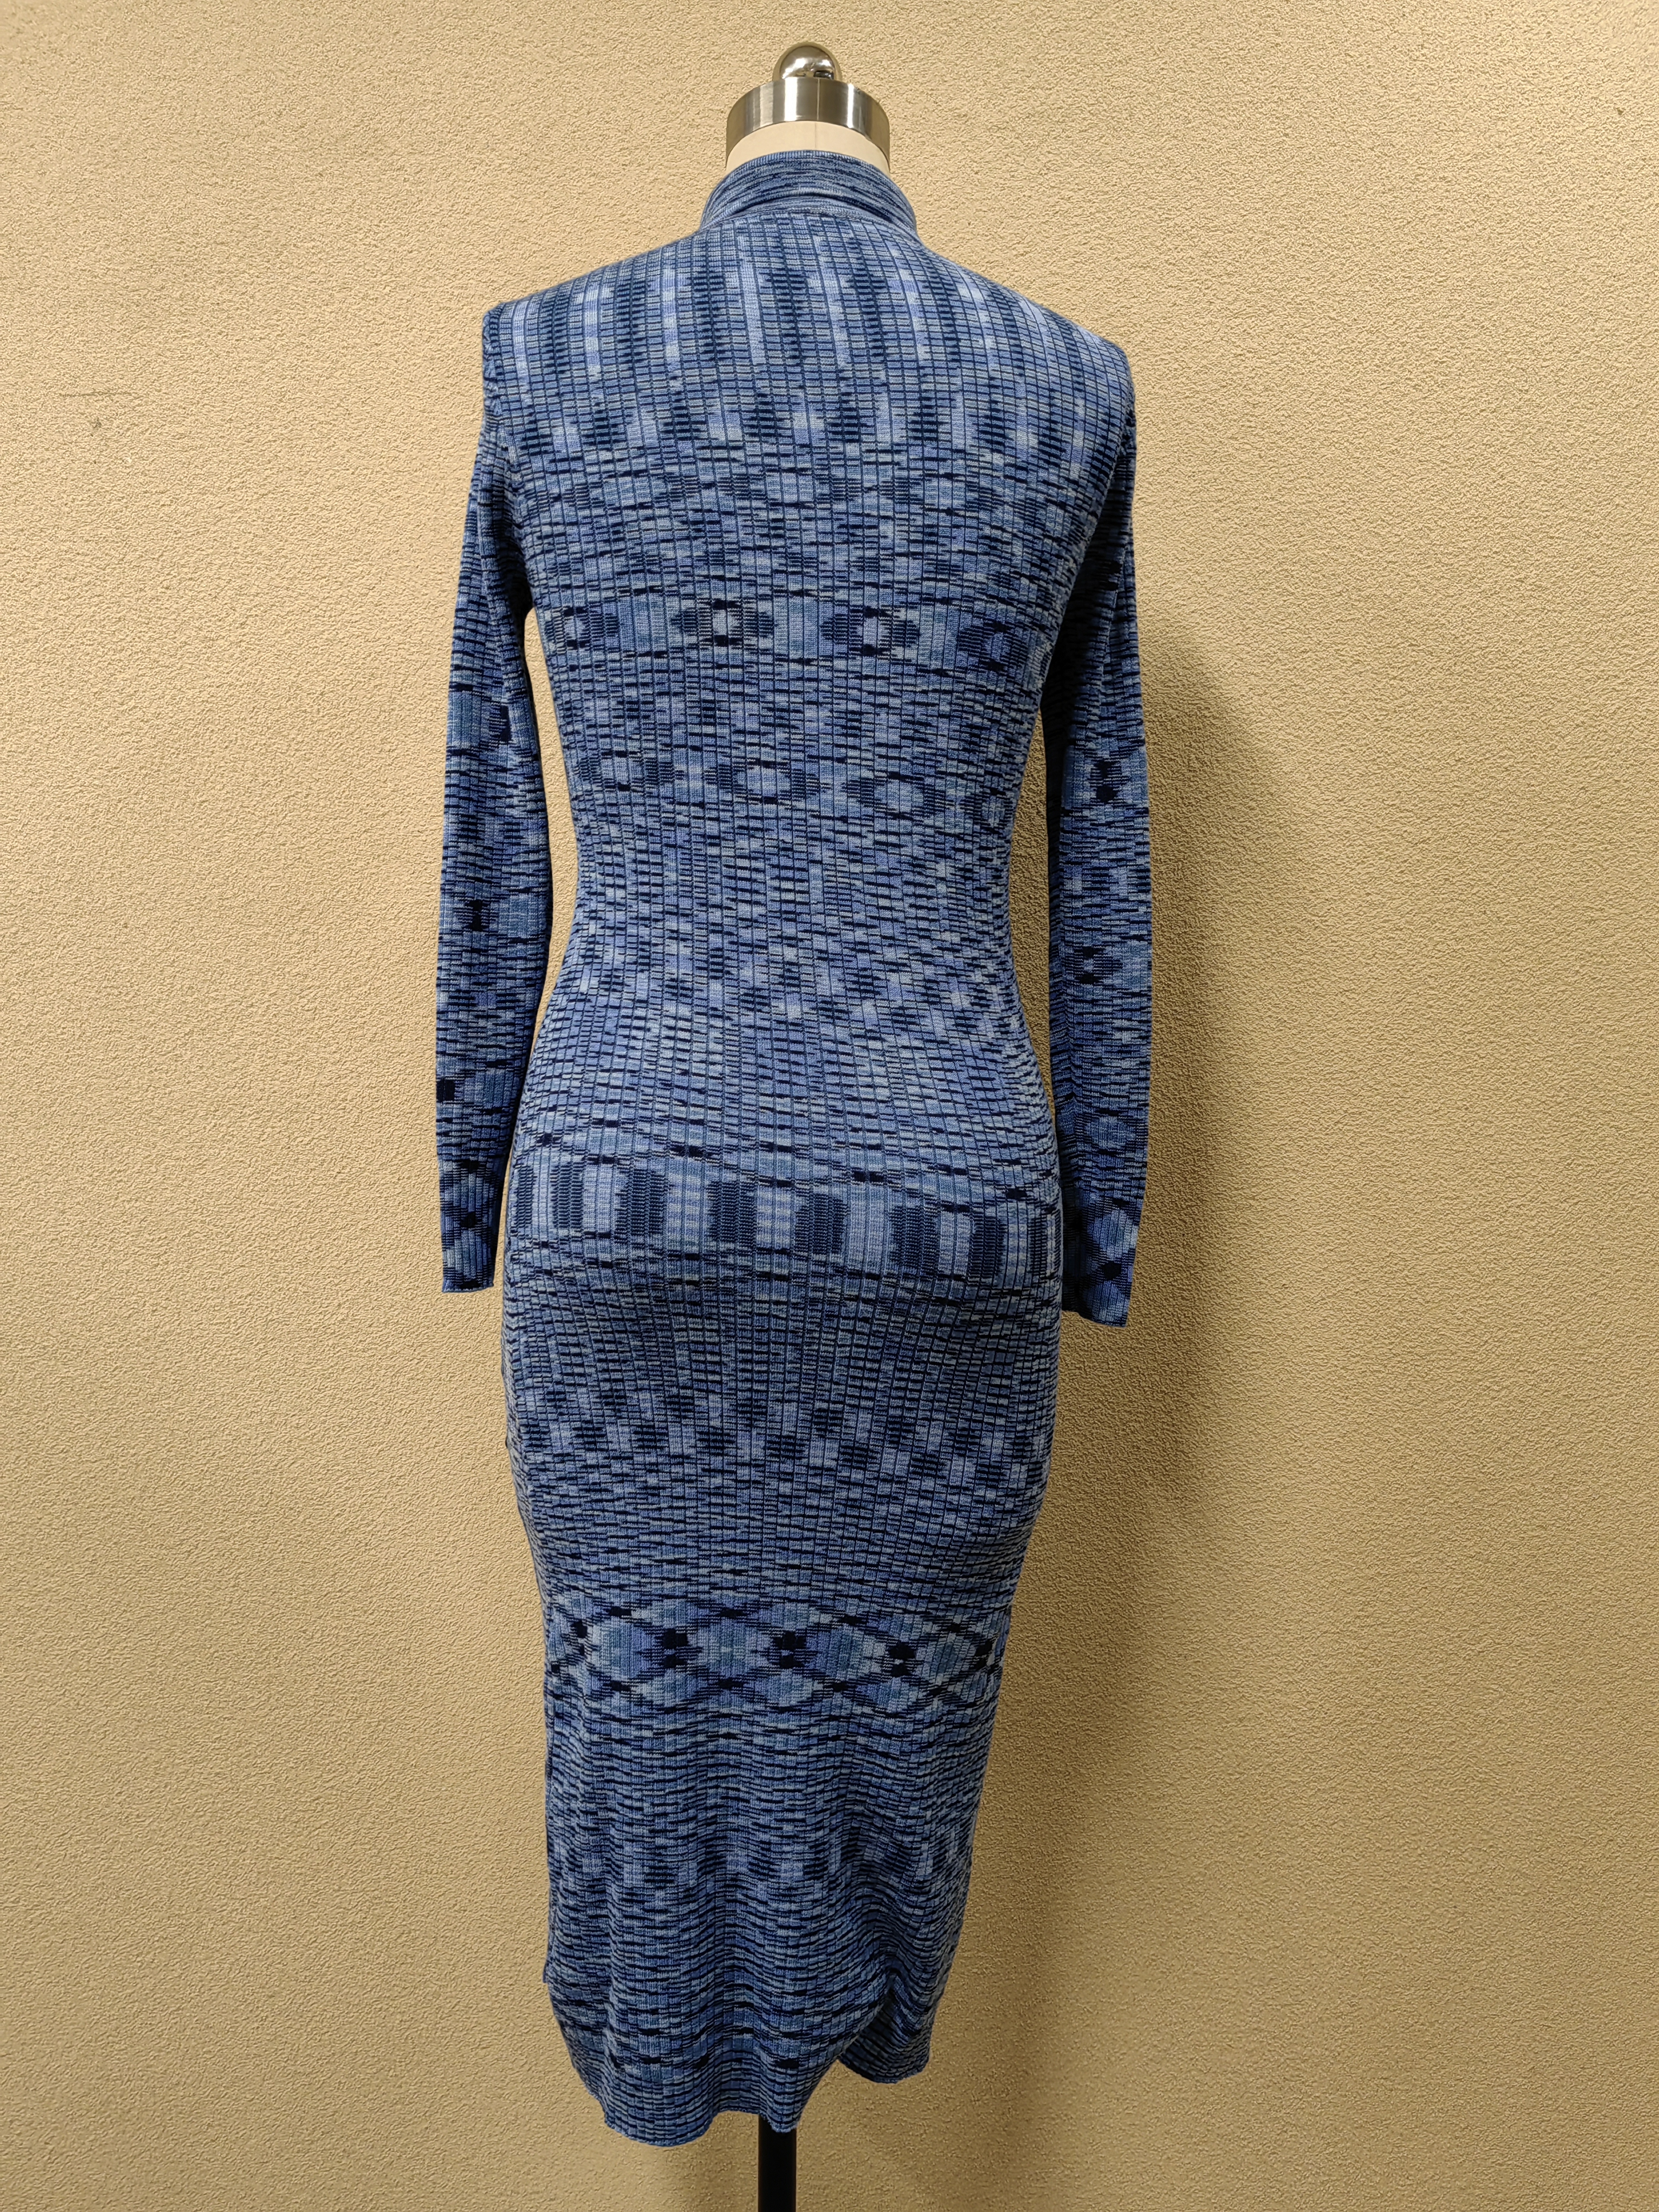 New Design Customized Blue Knitted Long Women Cashmere Warm Sweater Dress 